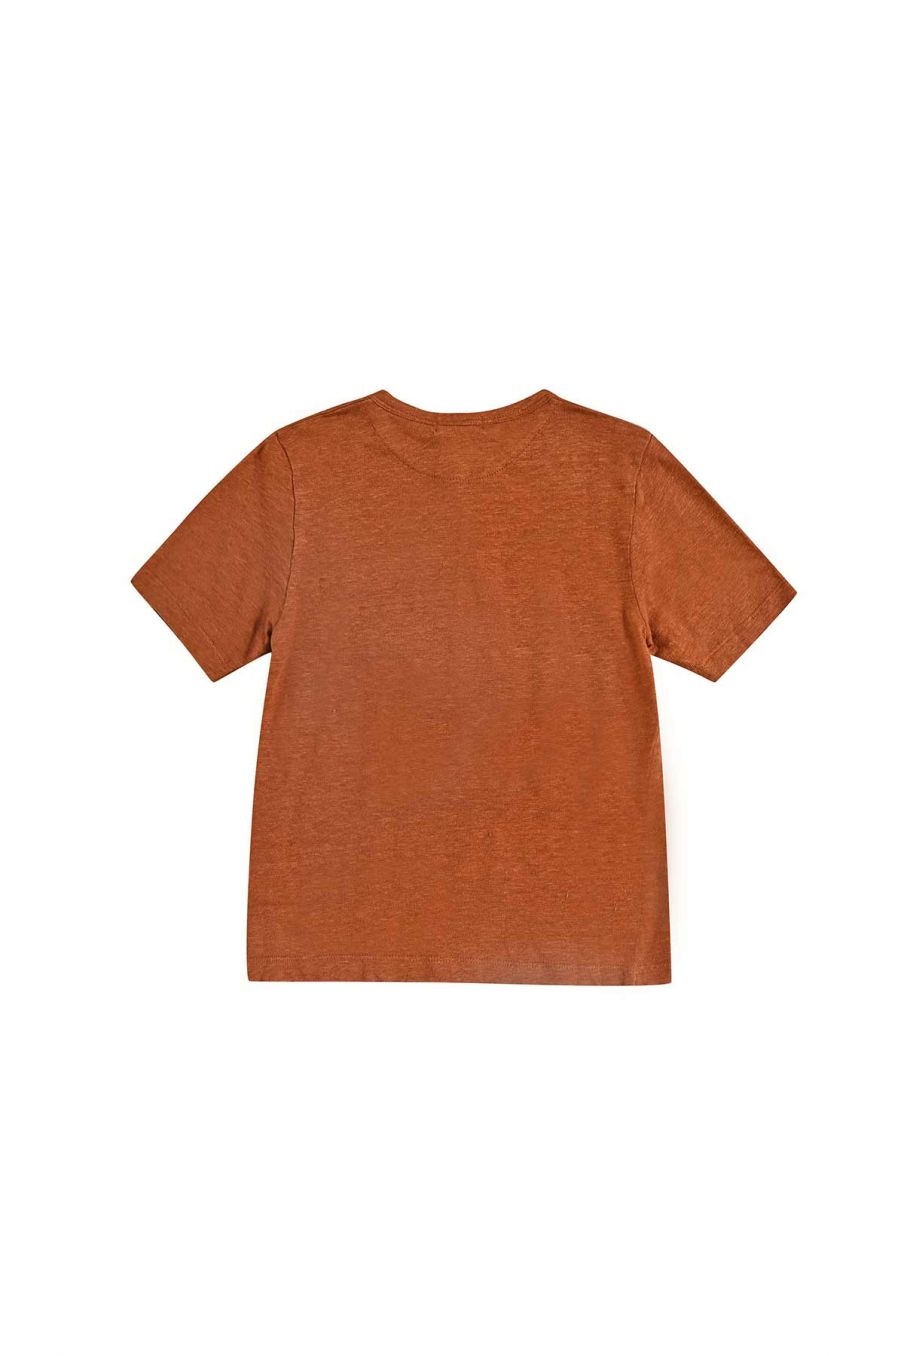 enfant-unisexe-t-shirt-tazo-cinnamon